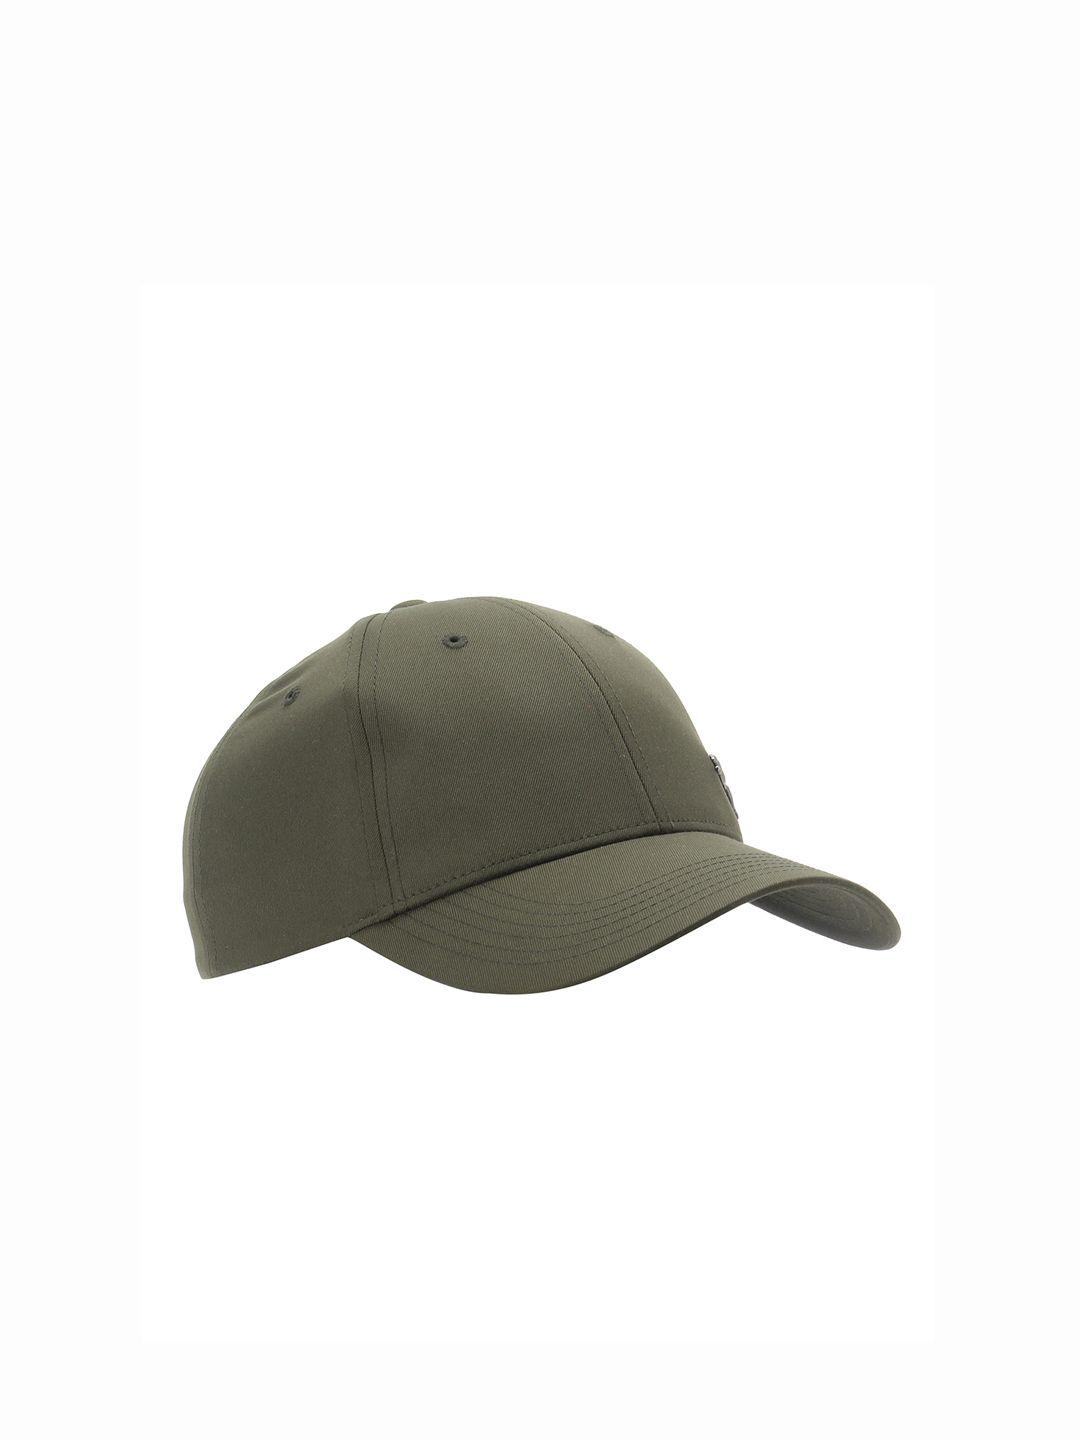 puma unisex green solid baseball cap